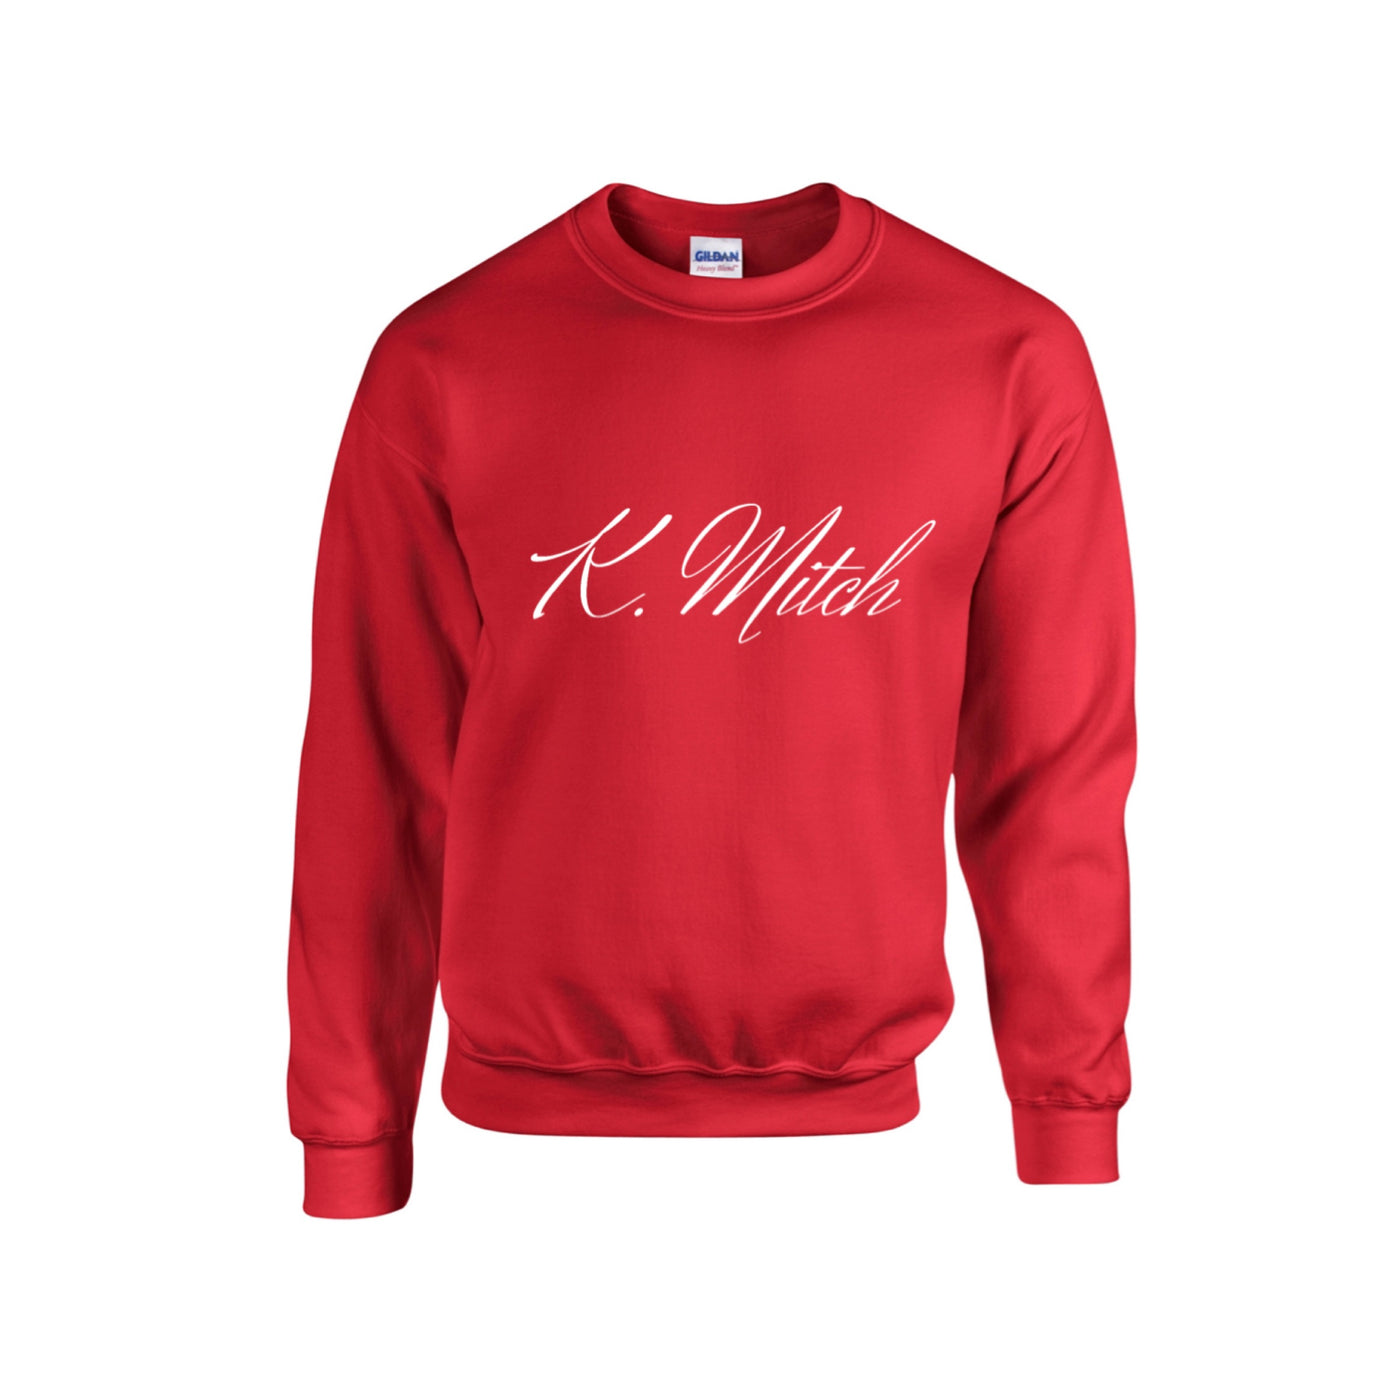 K. Mitch Signature Sweatshirt